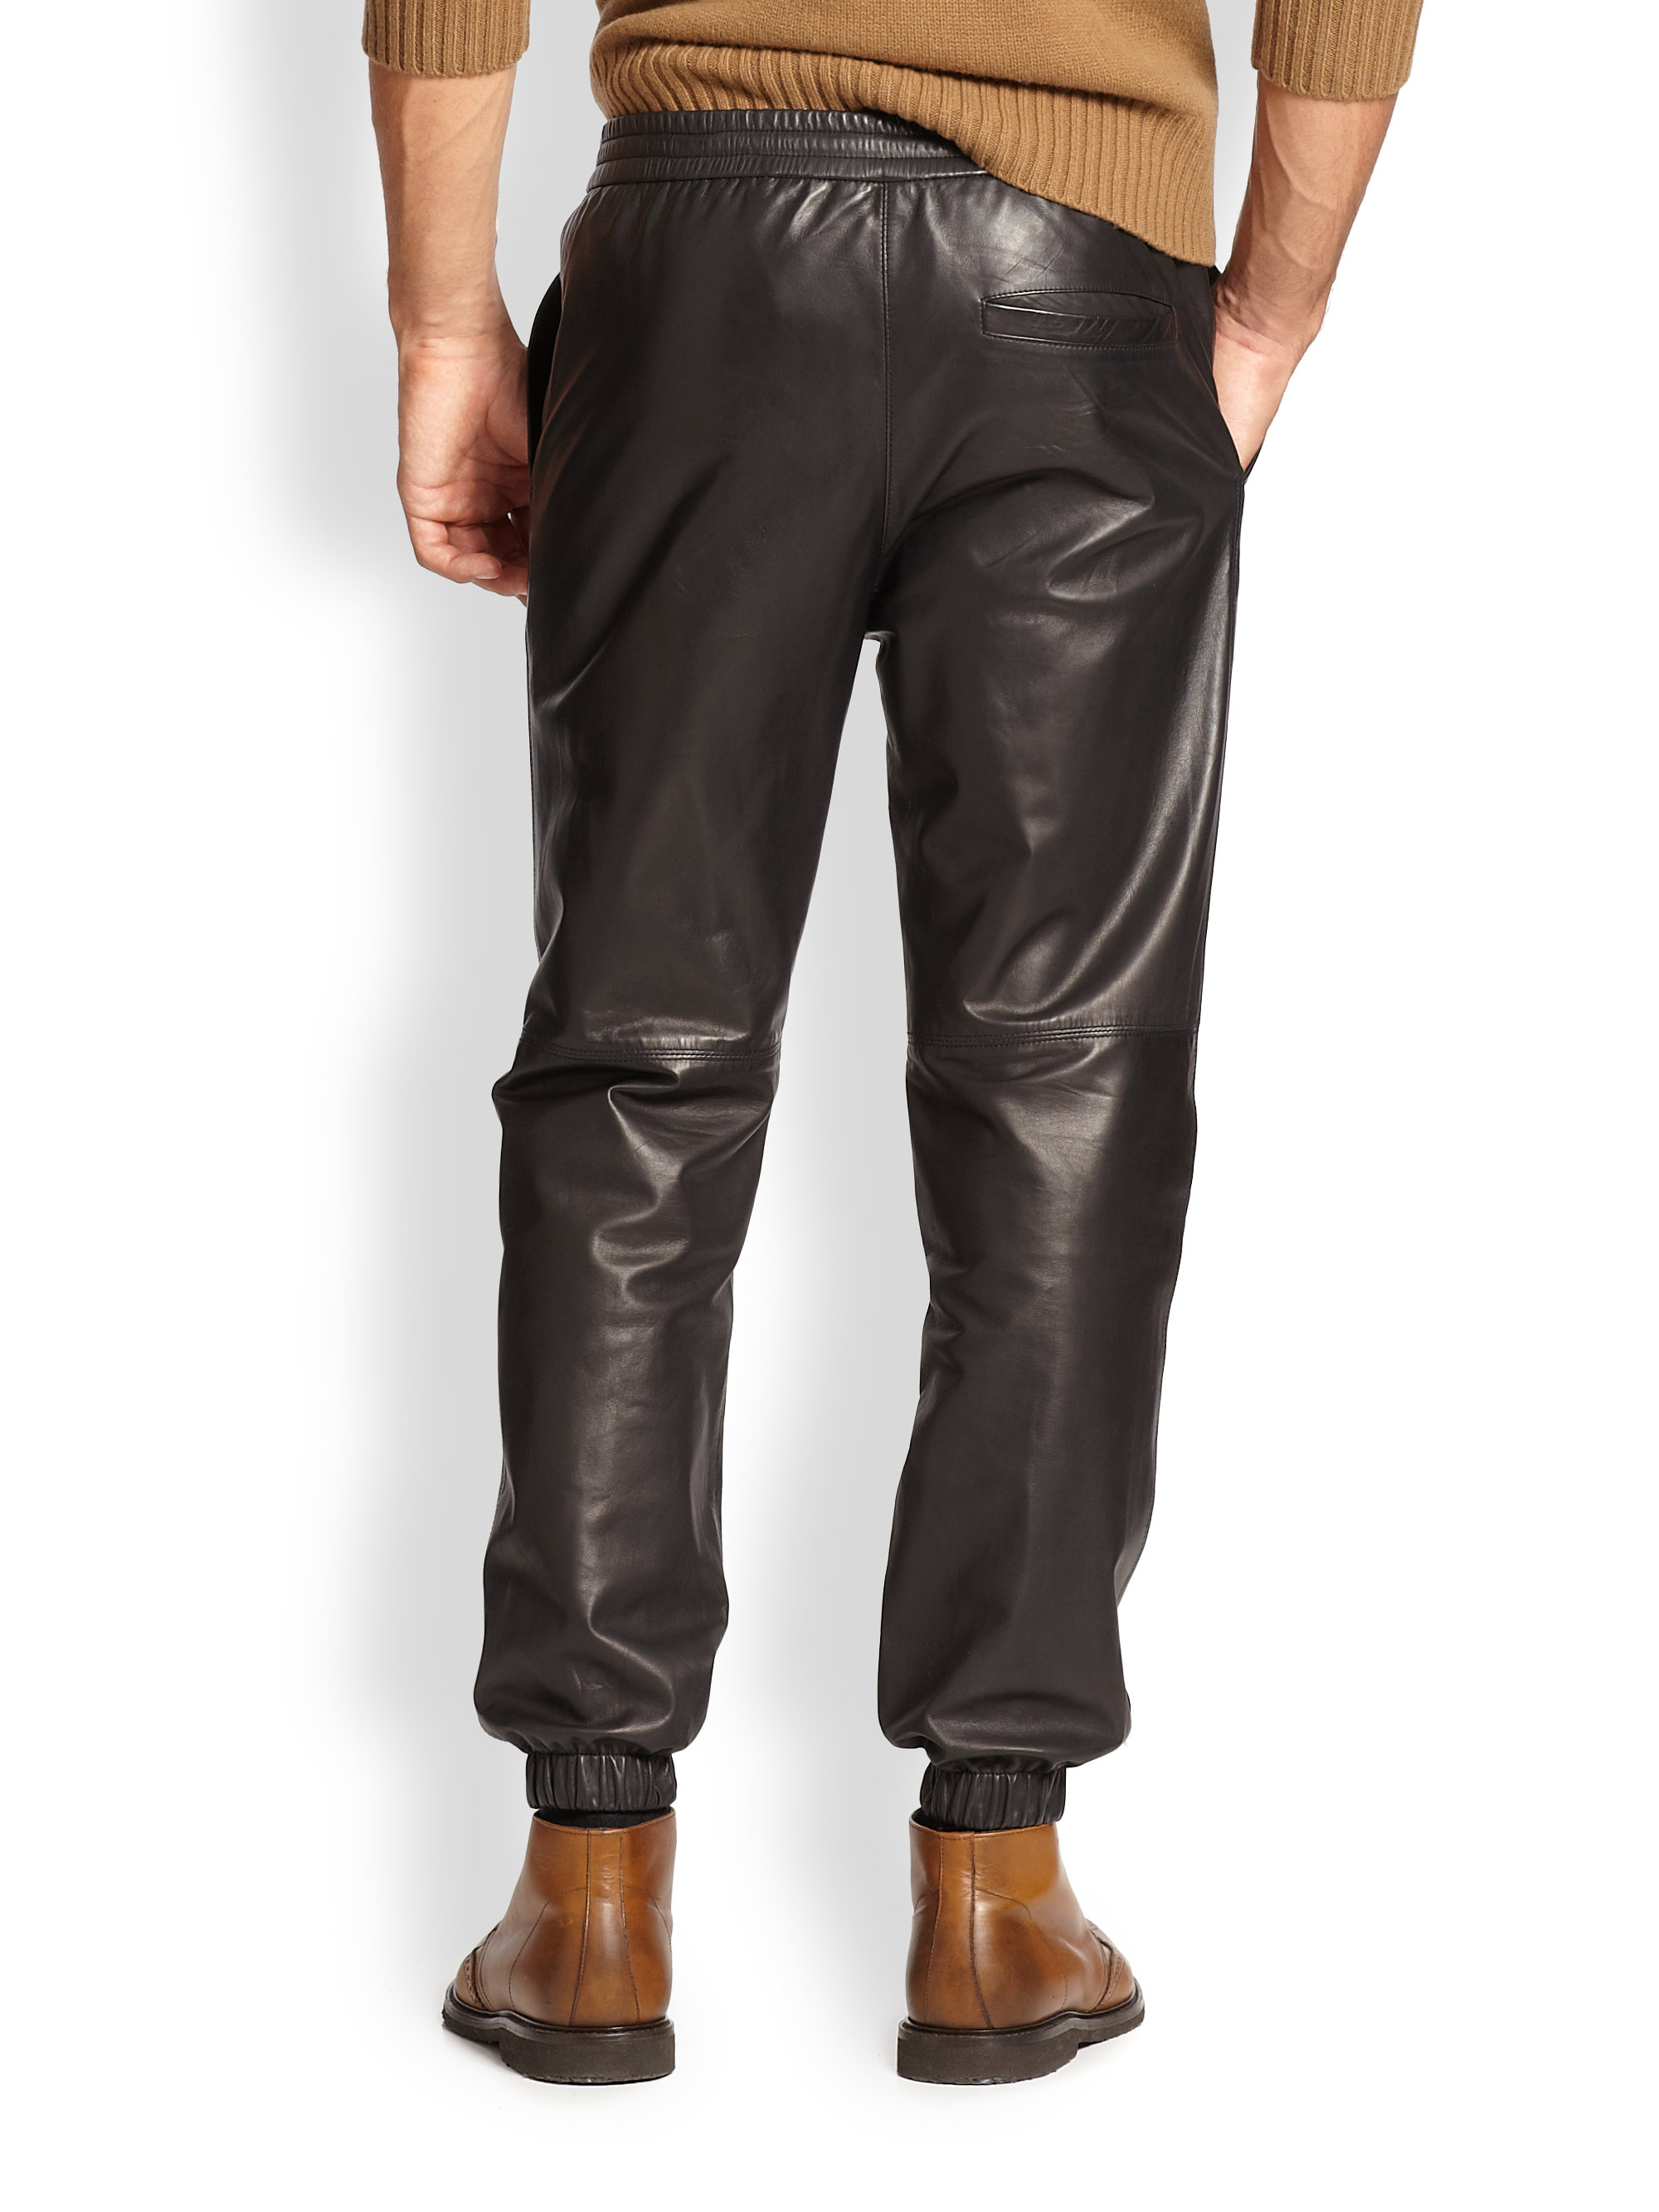 Vince Leather Jogger Pants in Black for Men - Lyst